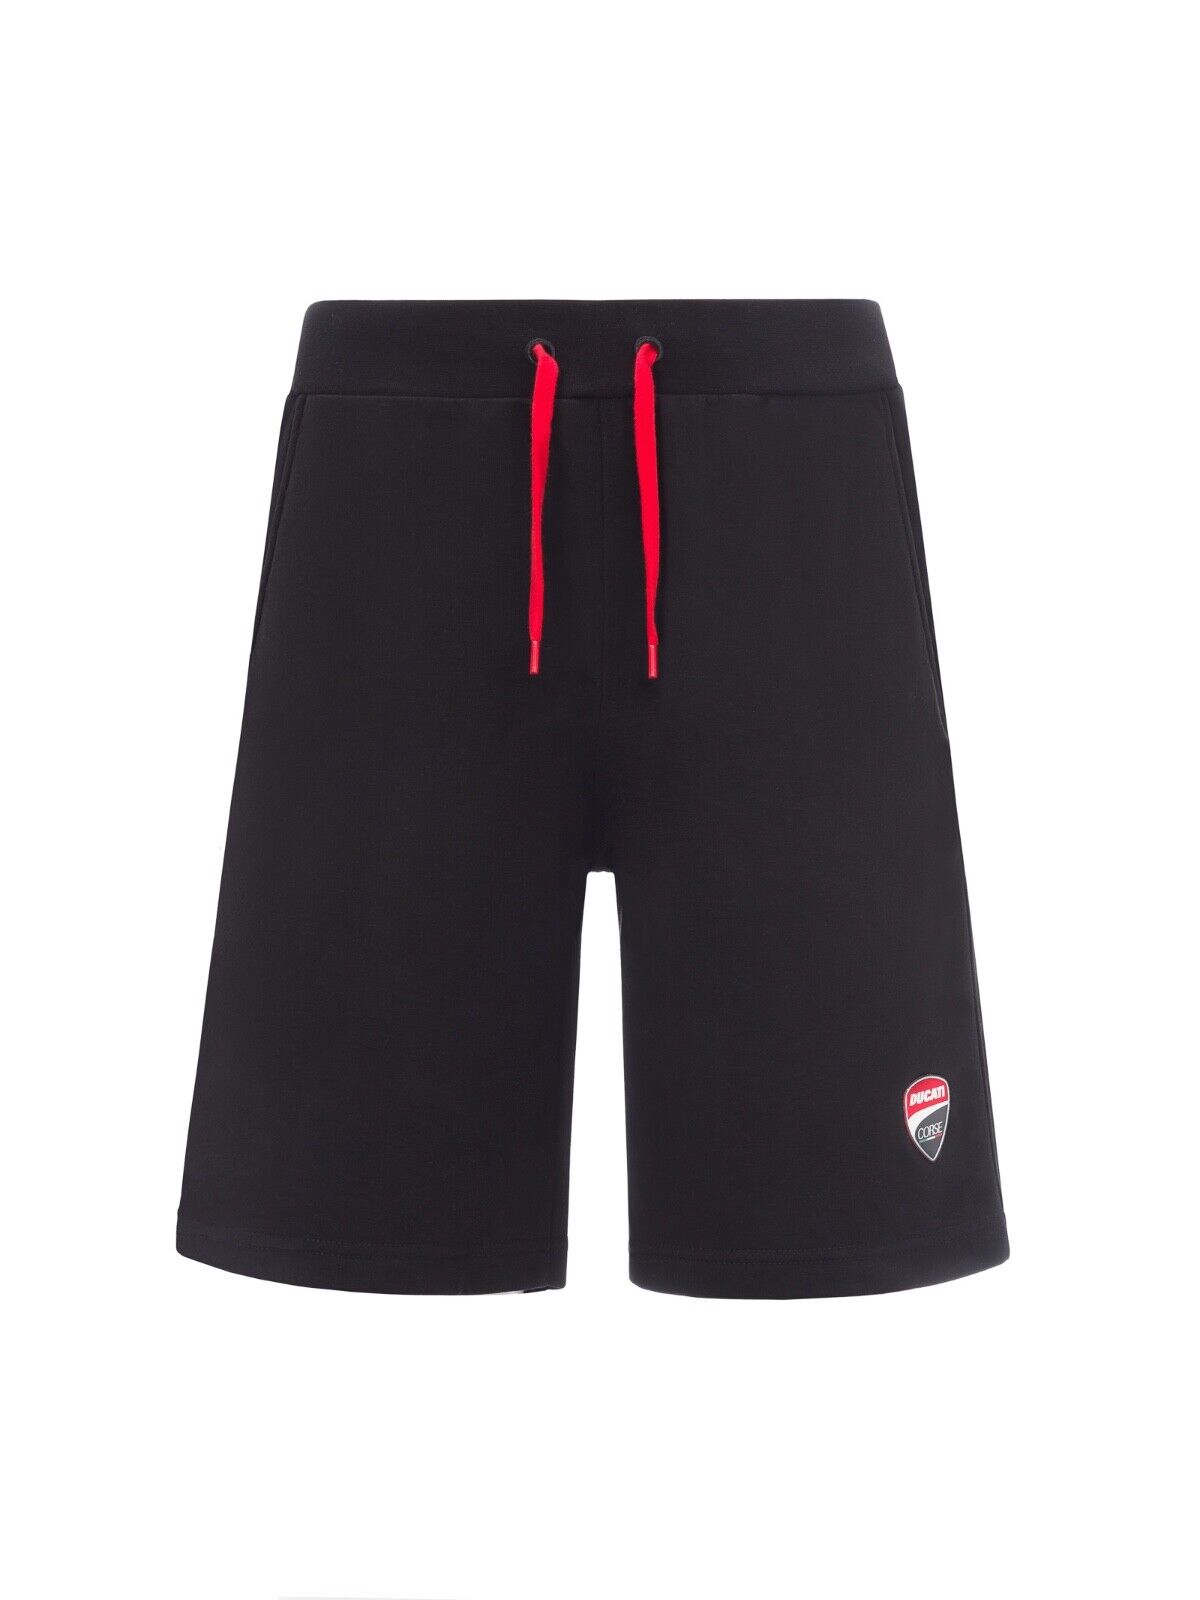 Ducati Corse Official Man's Black Shorts - 19 106002